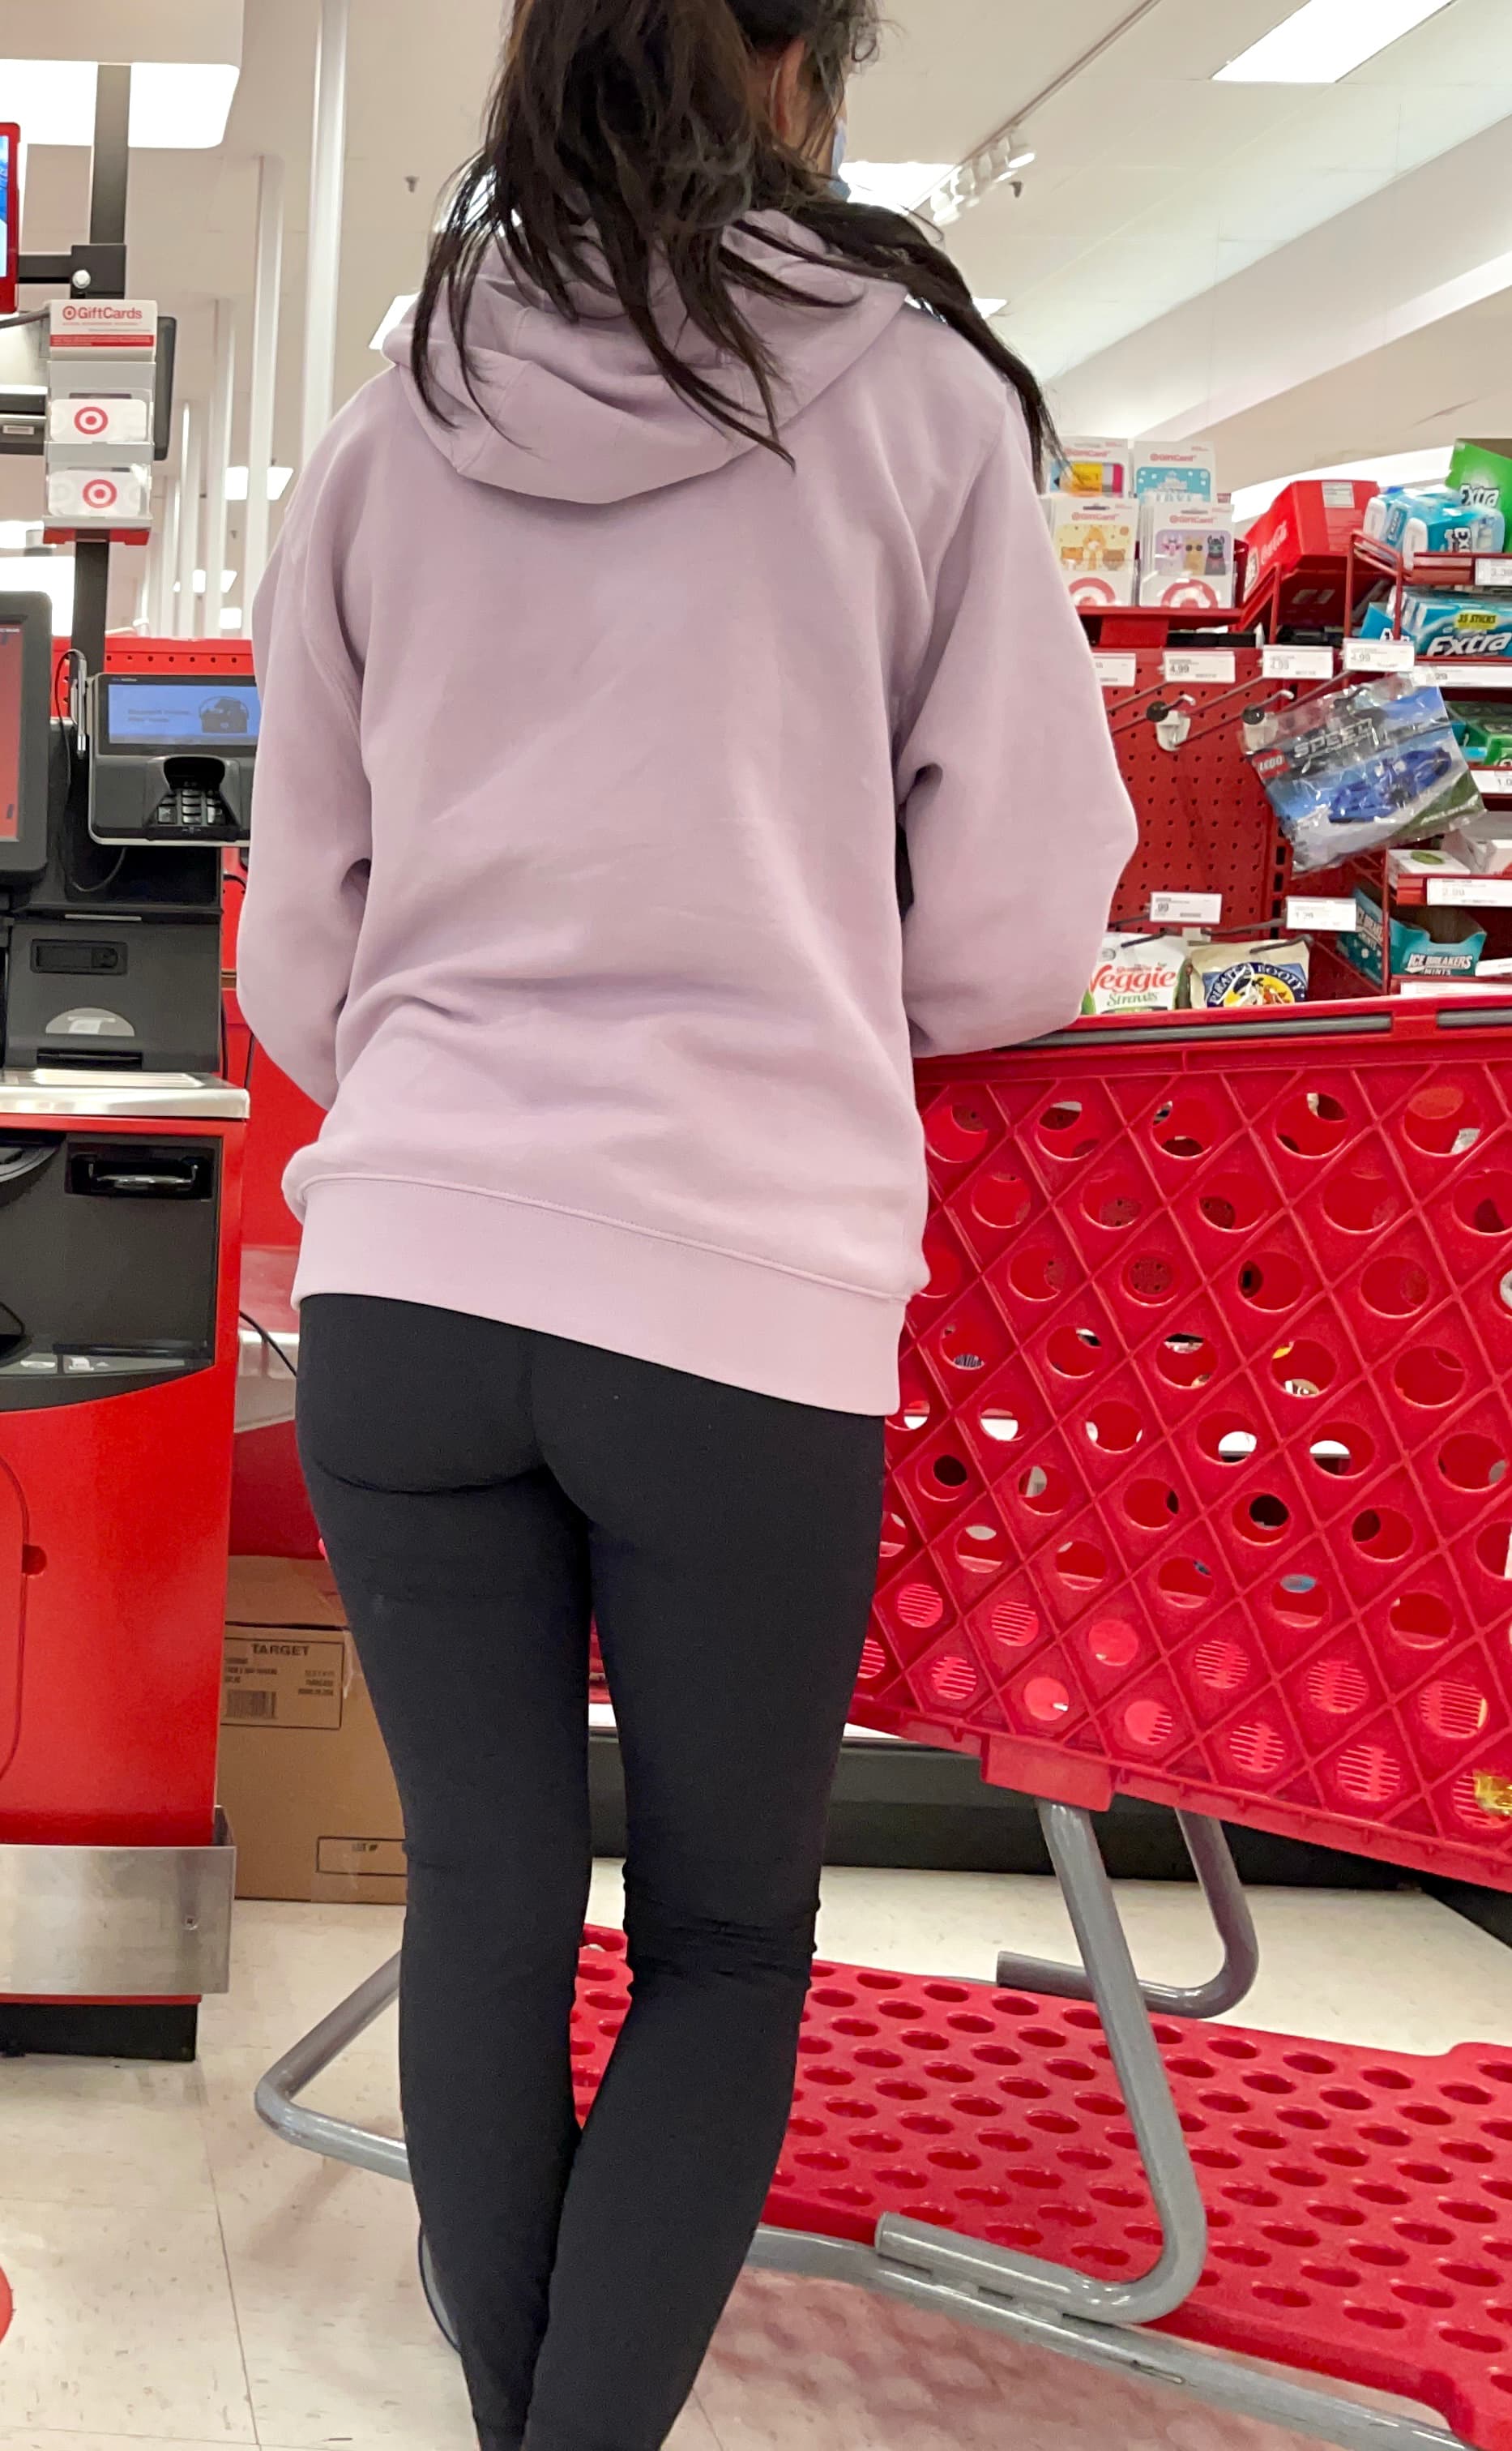 Good looking checkout at Target - Spandex, Leggings & Yoga Pants